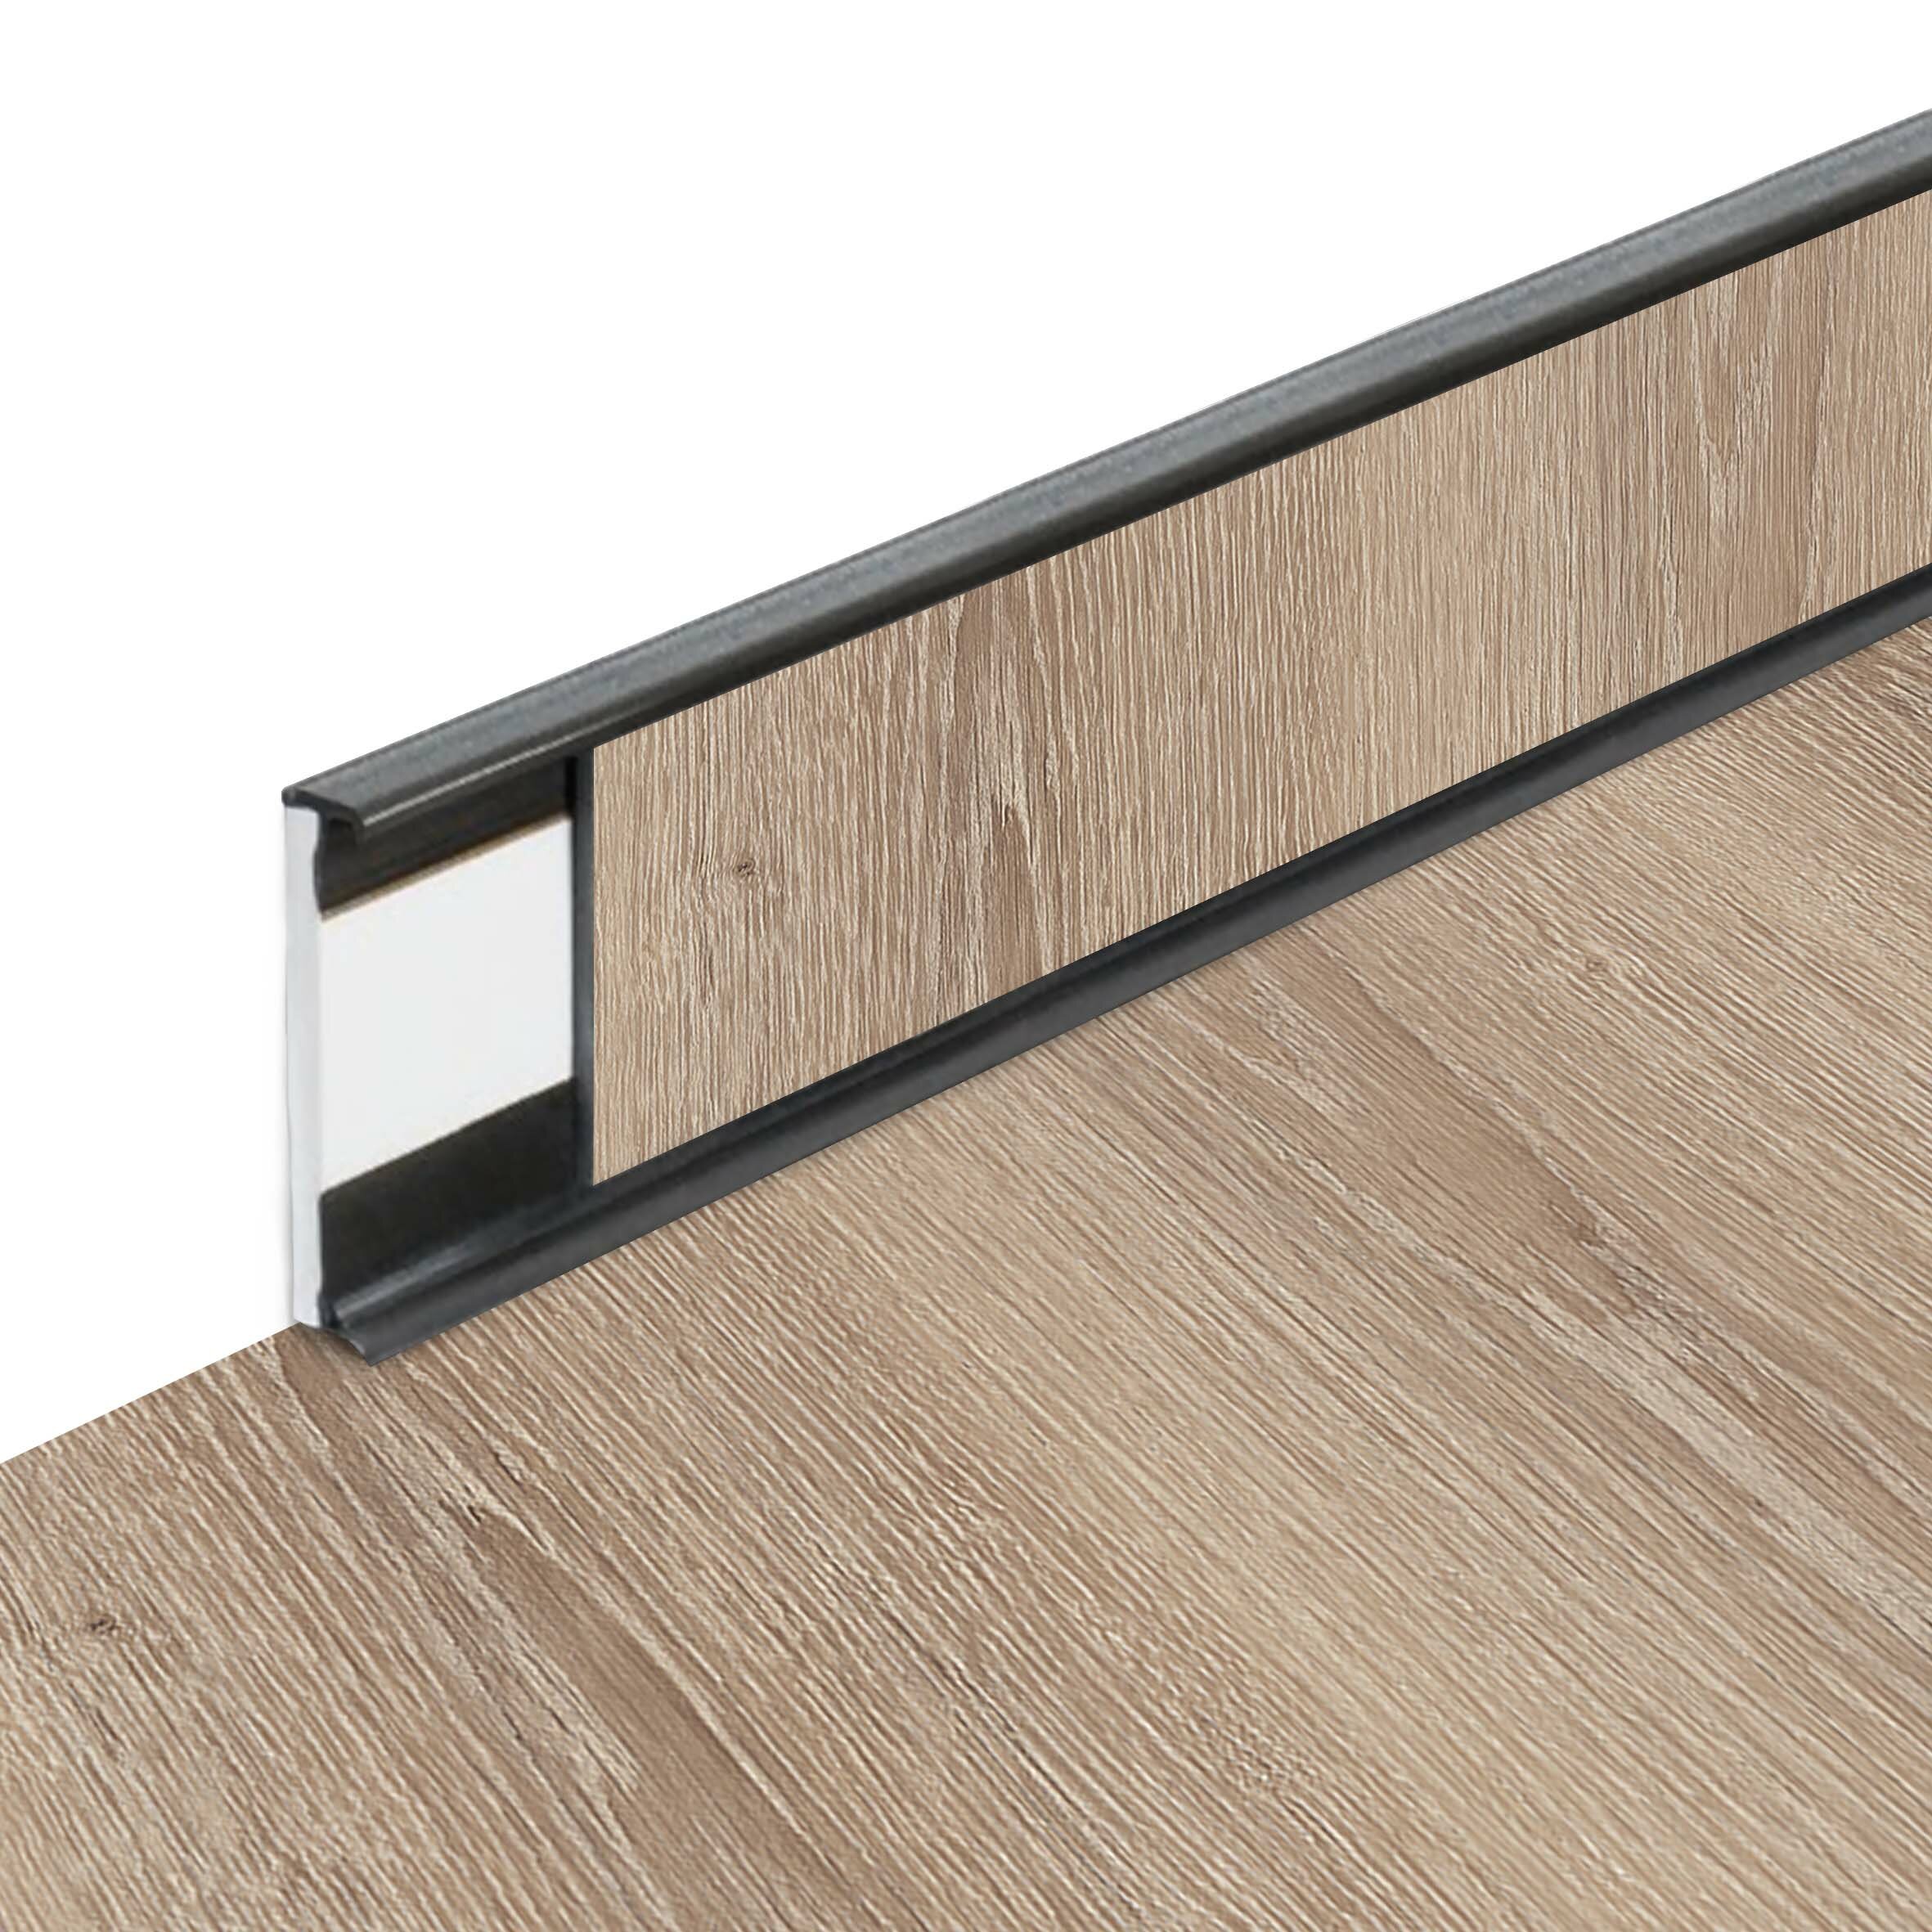 PVC vinylová soklová podlahová lišta Fortelock Business Tyrolean oak W001 Graphite - dĺžka 200 cm, výška 5,8 cm, hrúbka 1,2 cm